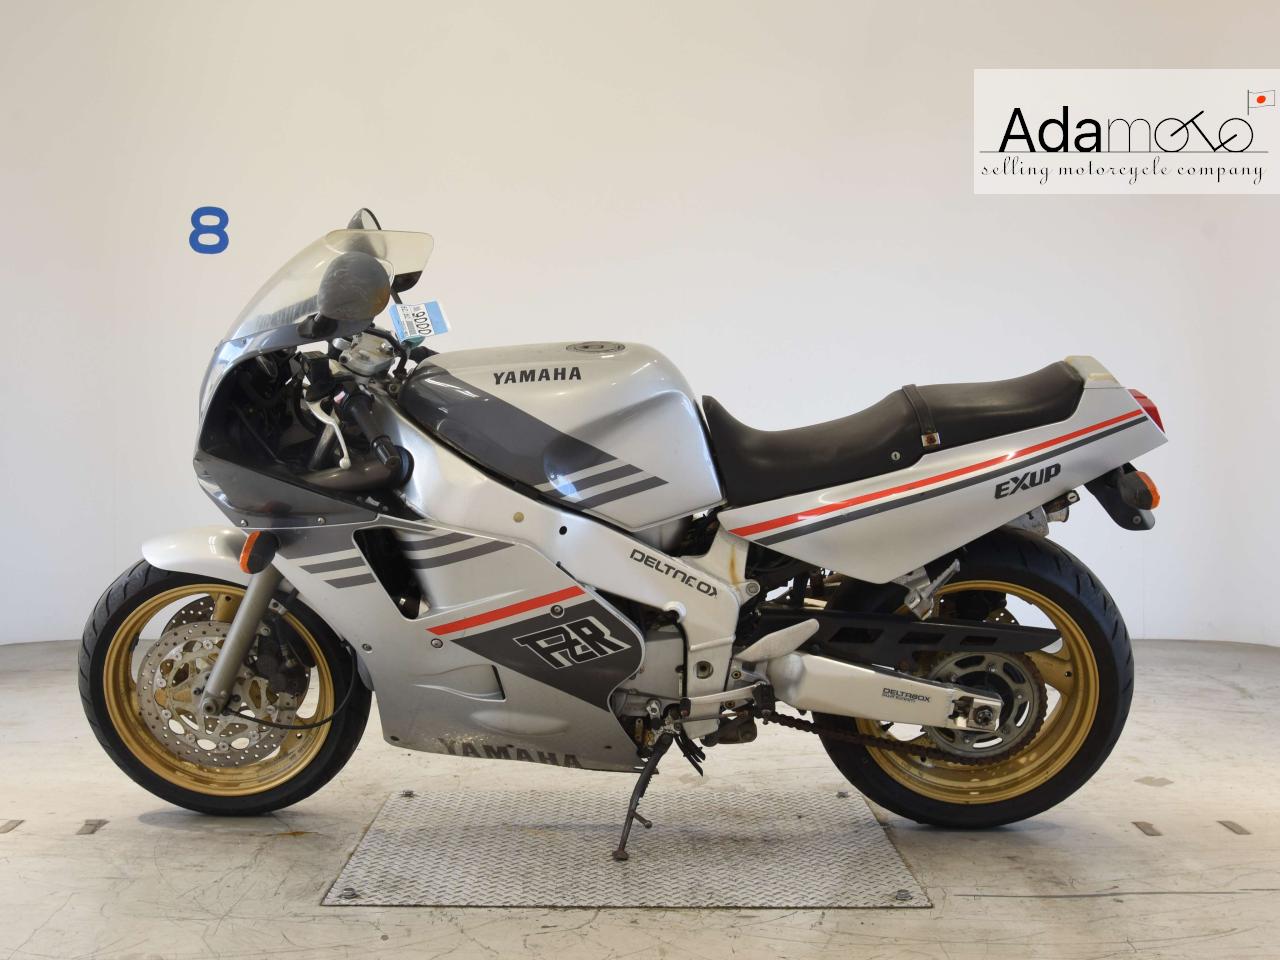 Yamaha FZR1000 short - Adamoto - Motorcycles from Japan